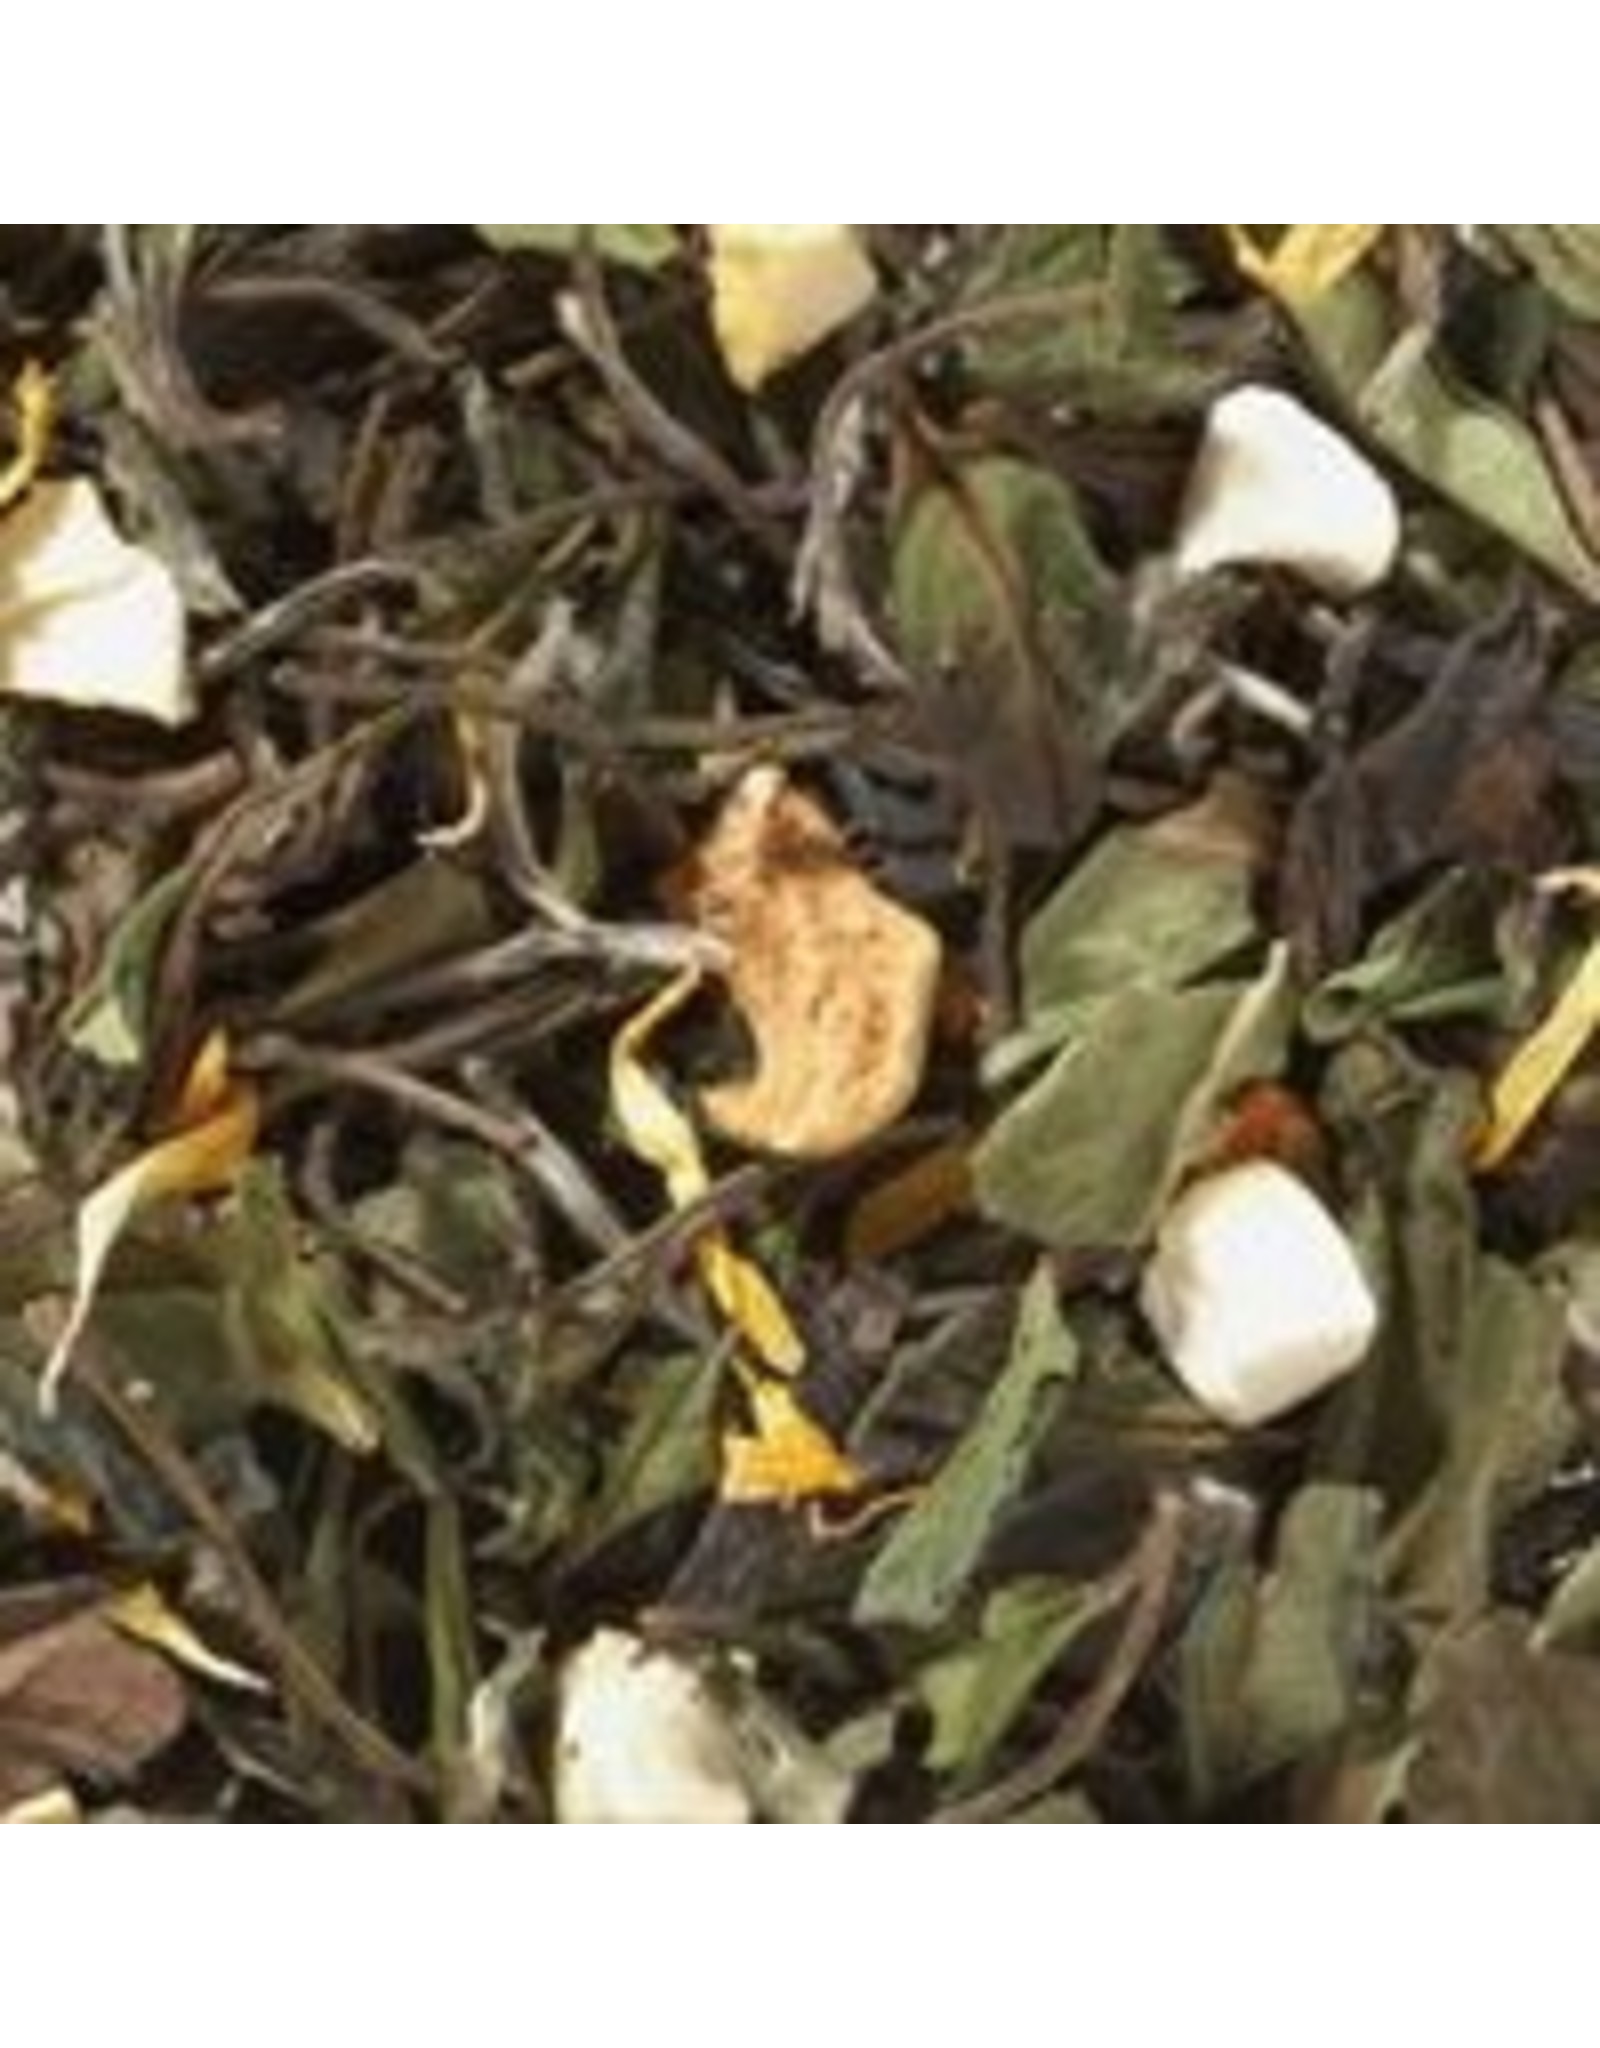 Tea from China White Mango Pear Organic